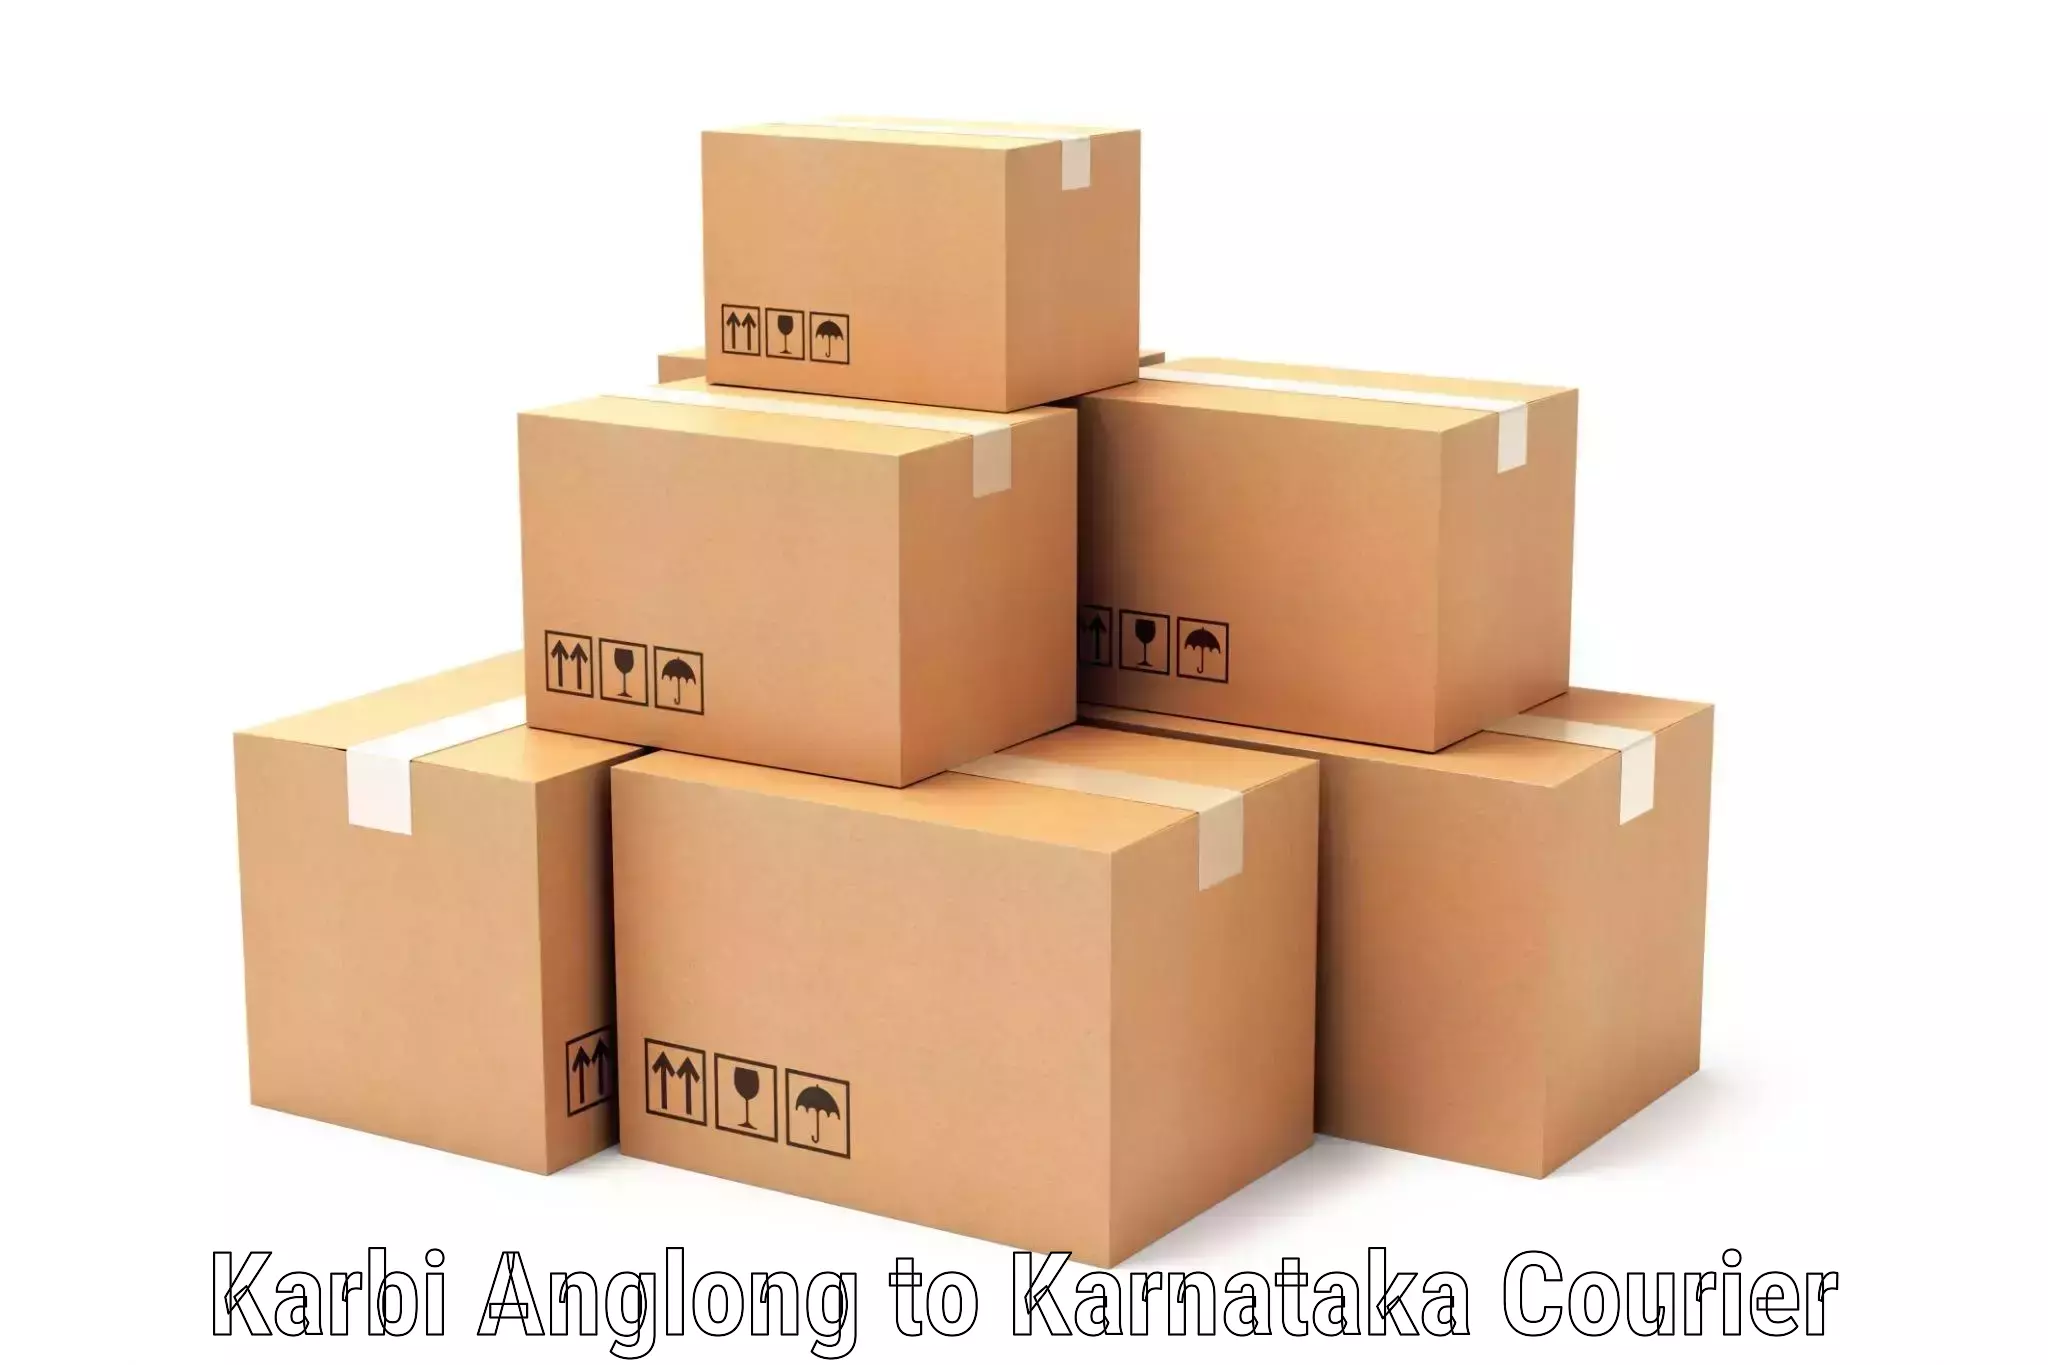 Comprehensive delivery network Karbi Anglong to Yadgir